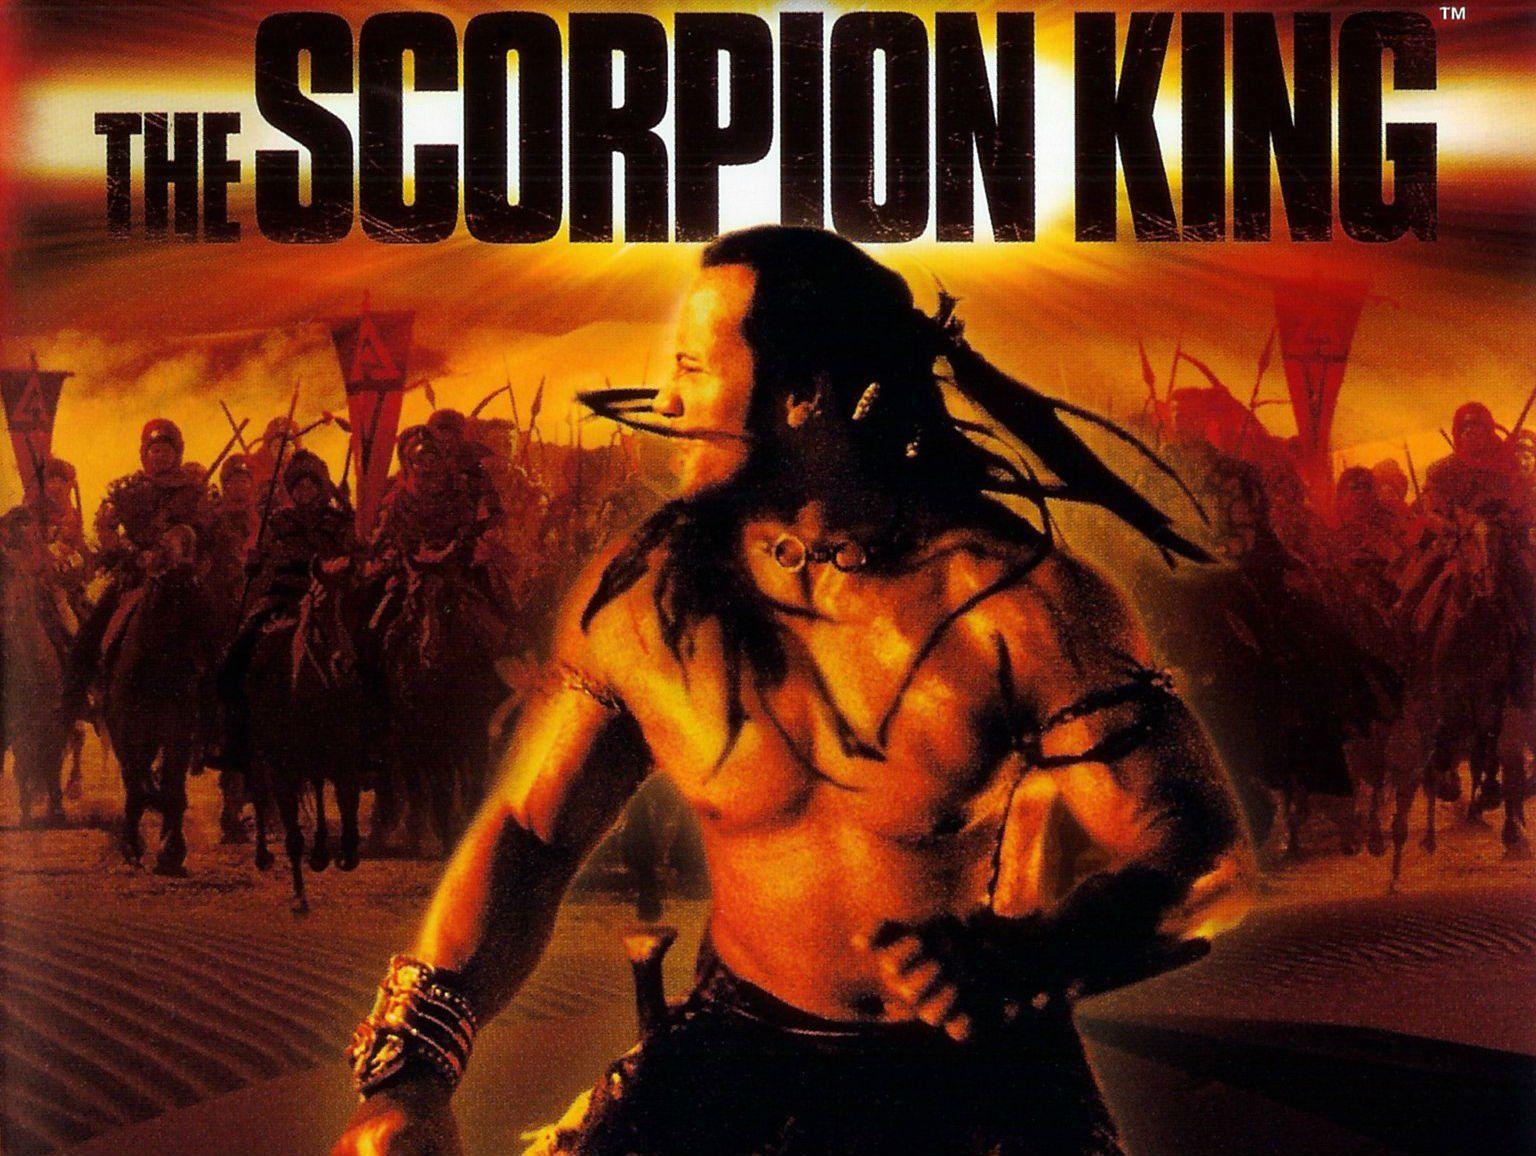 The Scorpion King Movie Wallpaper